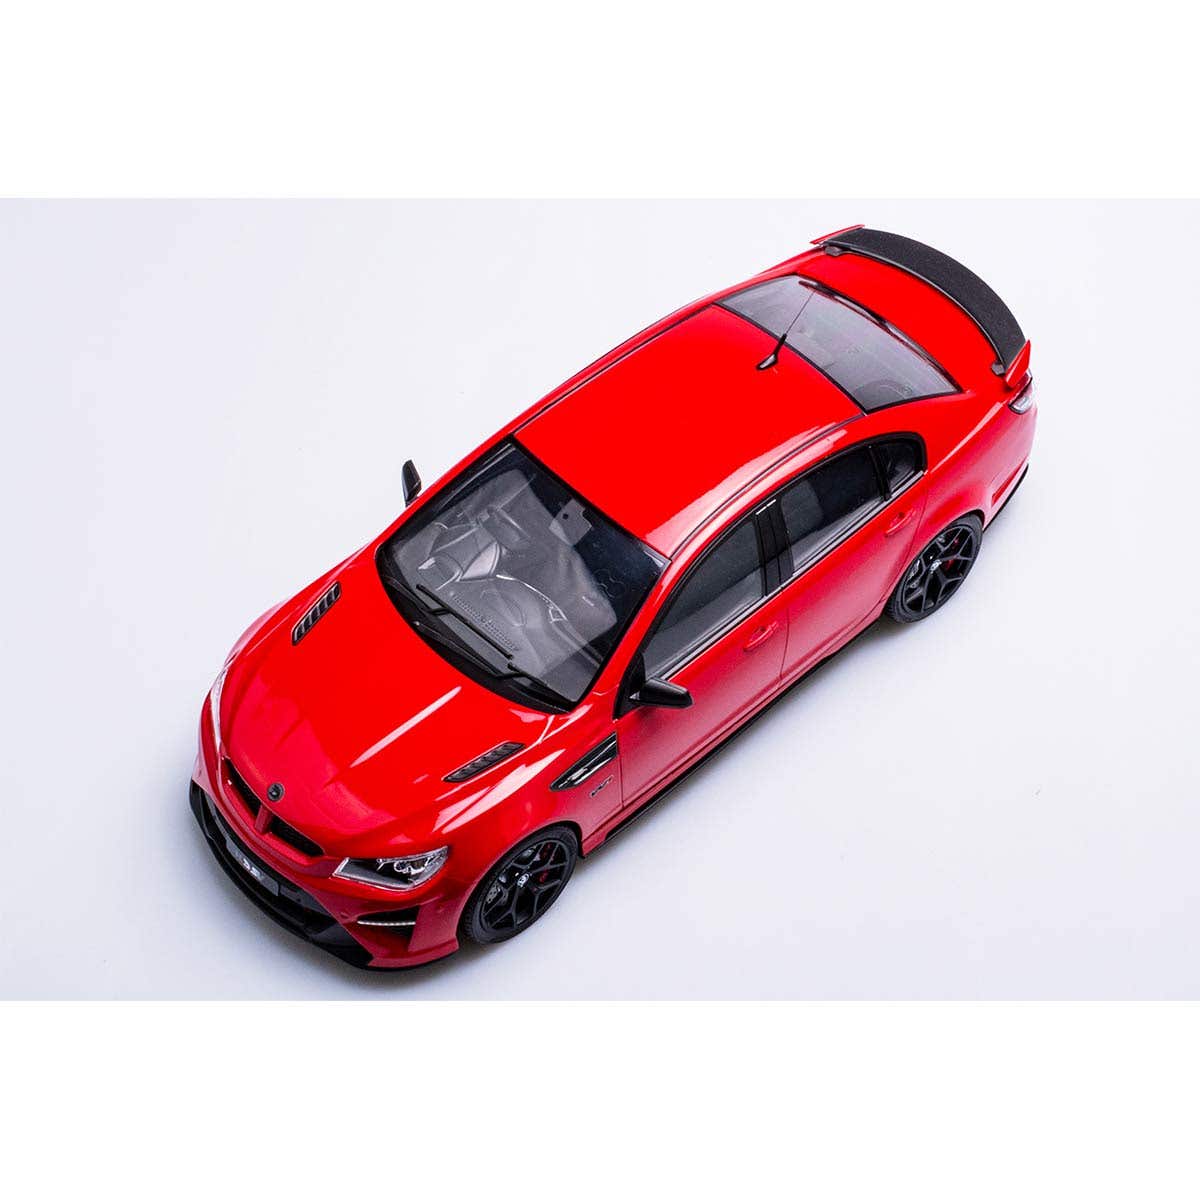 HSV GTSR W1 STING RED - 1:12 Scale Resin Model Car